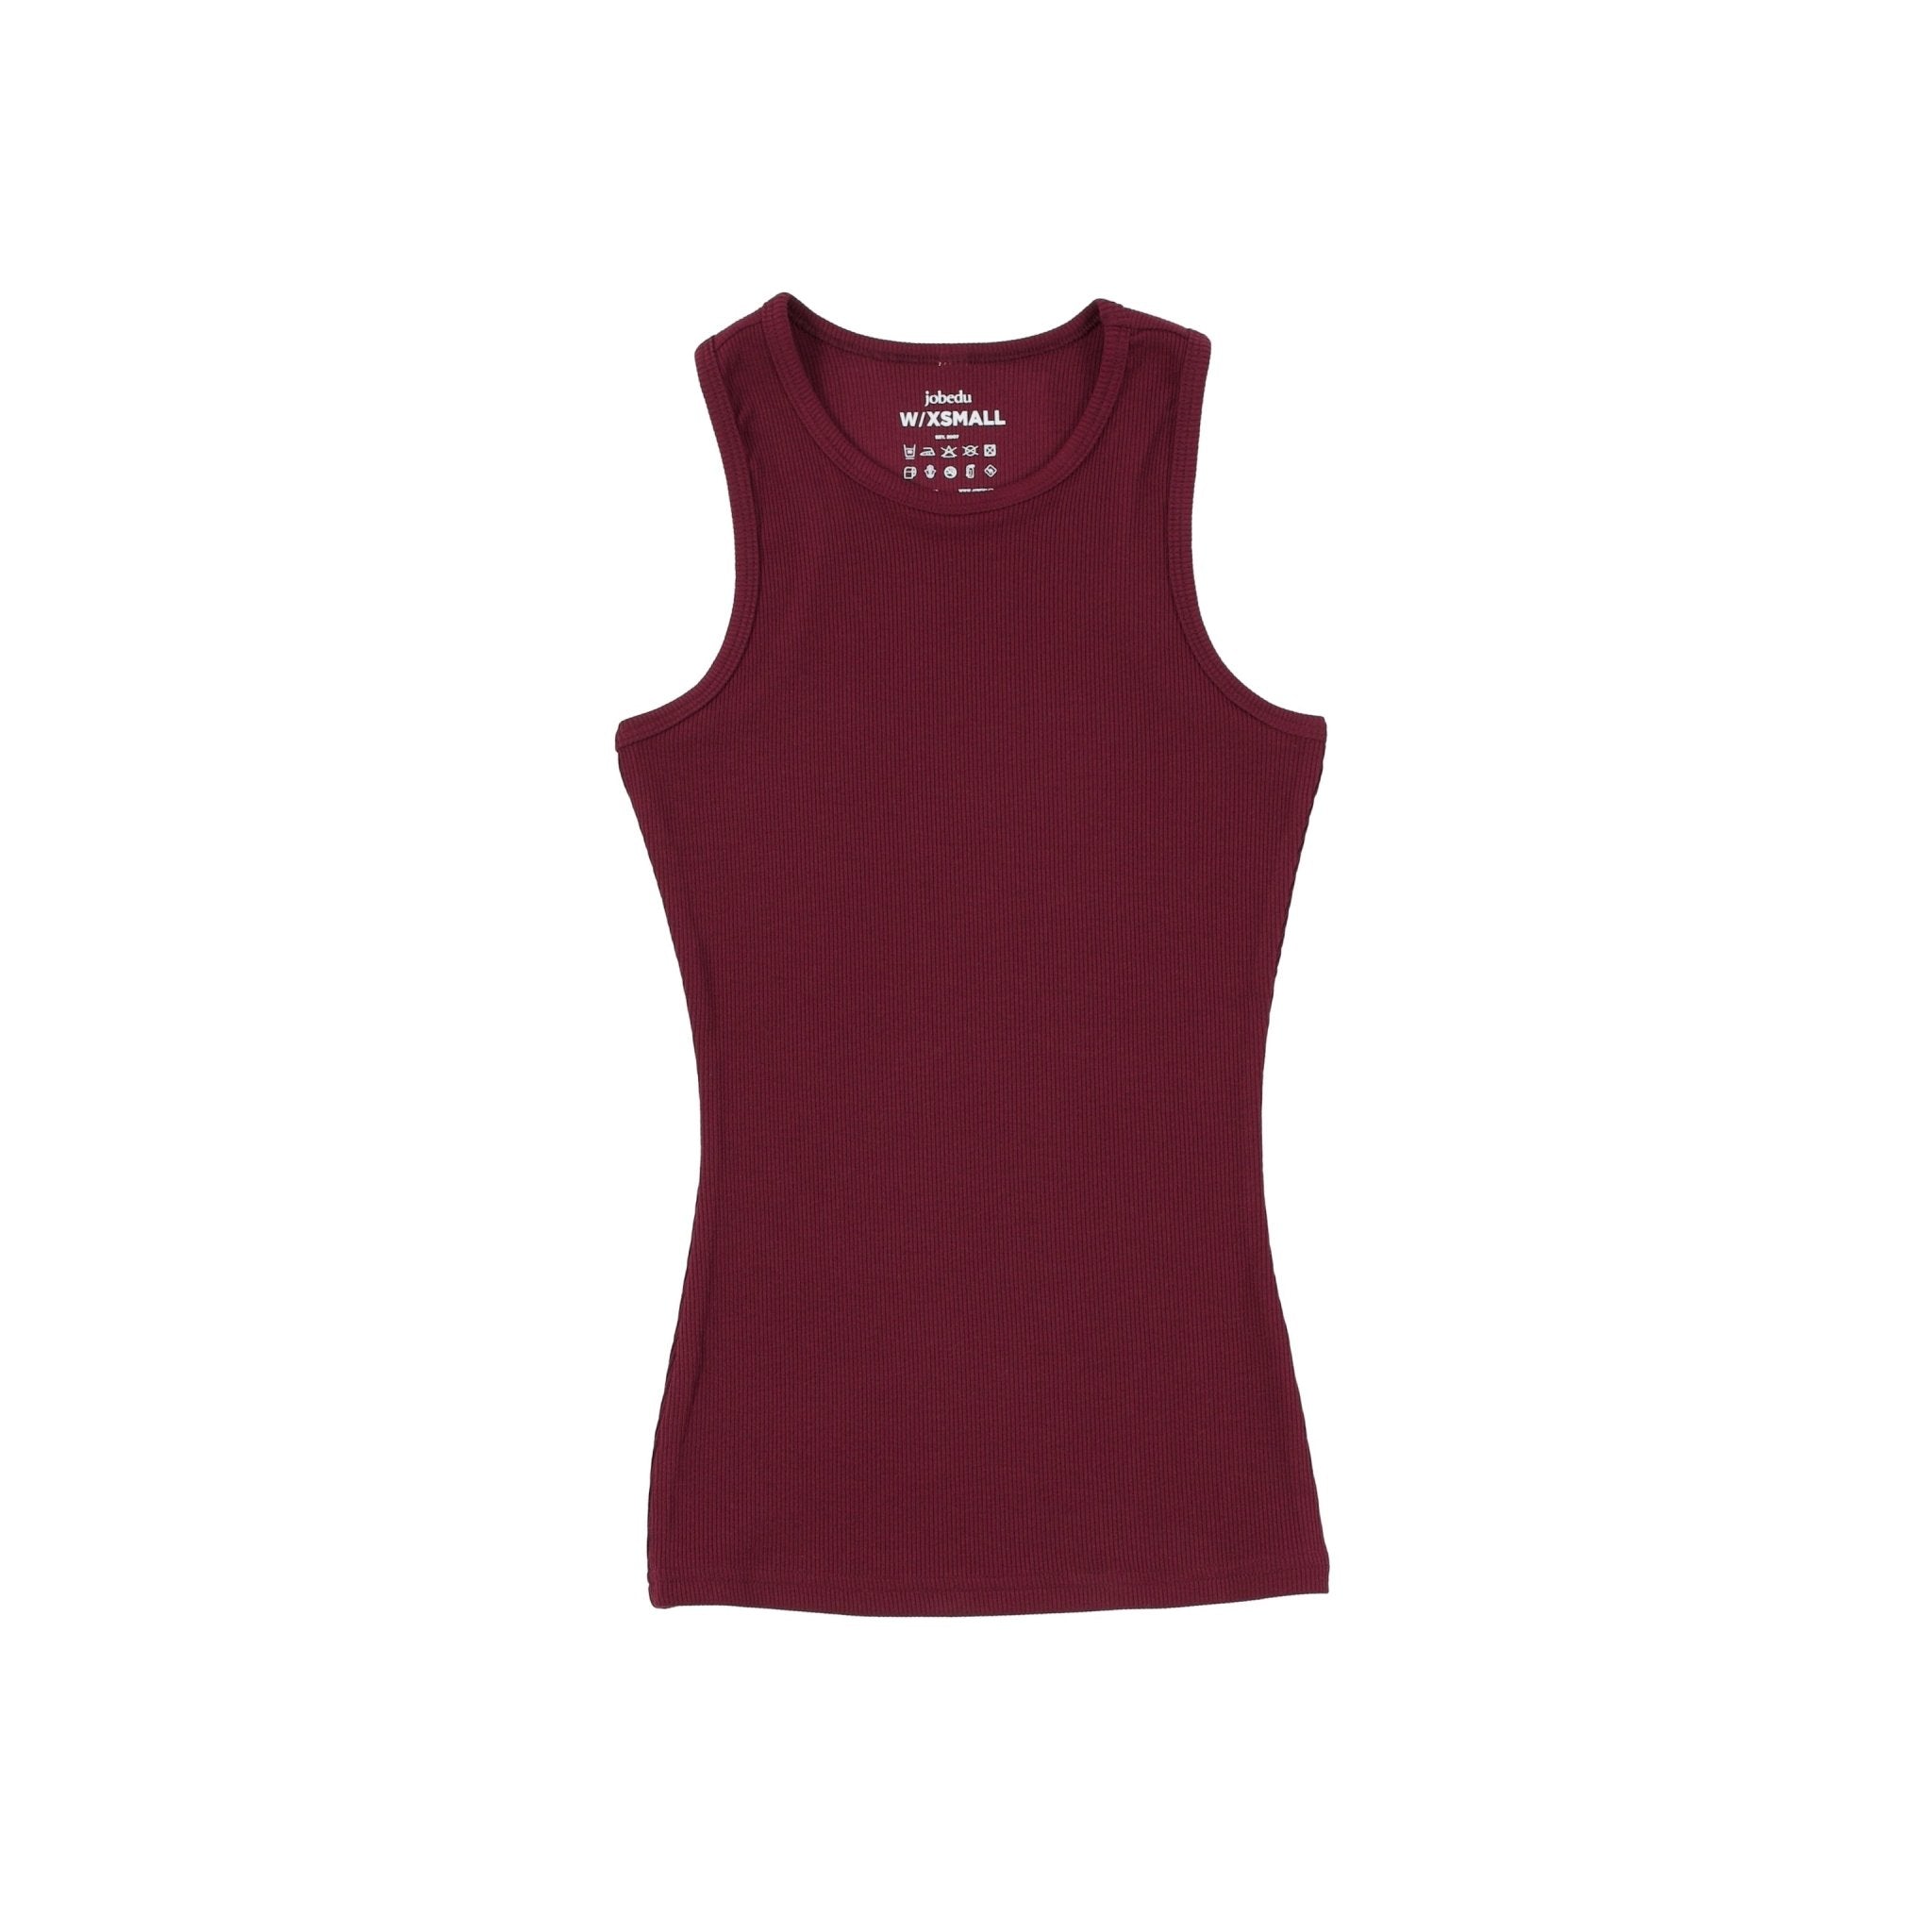 Rib Tank top for girls women's wear under t-shirts